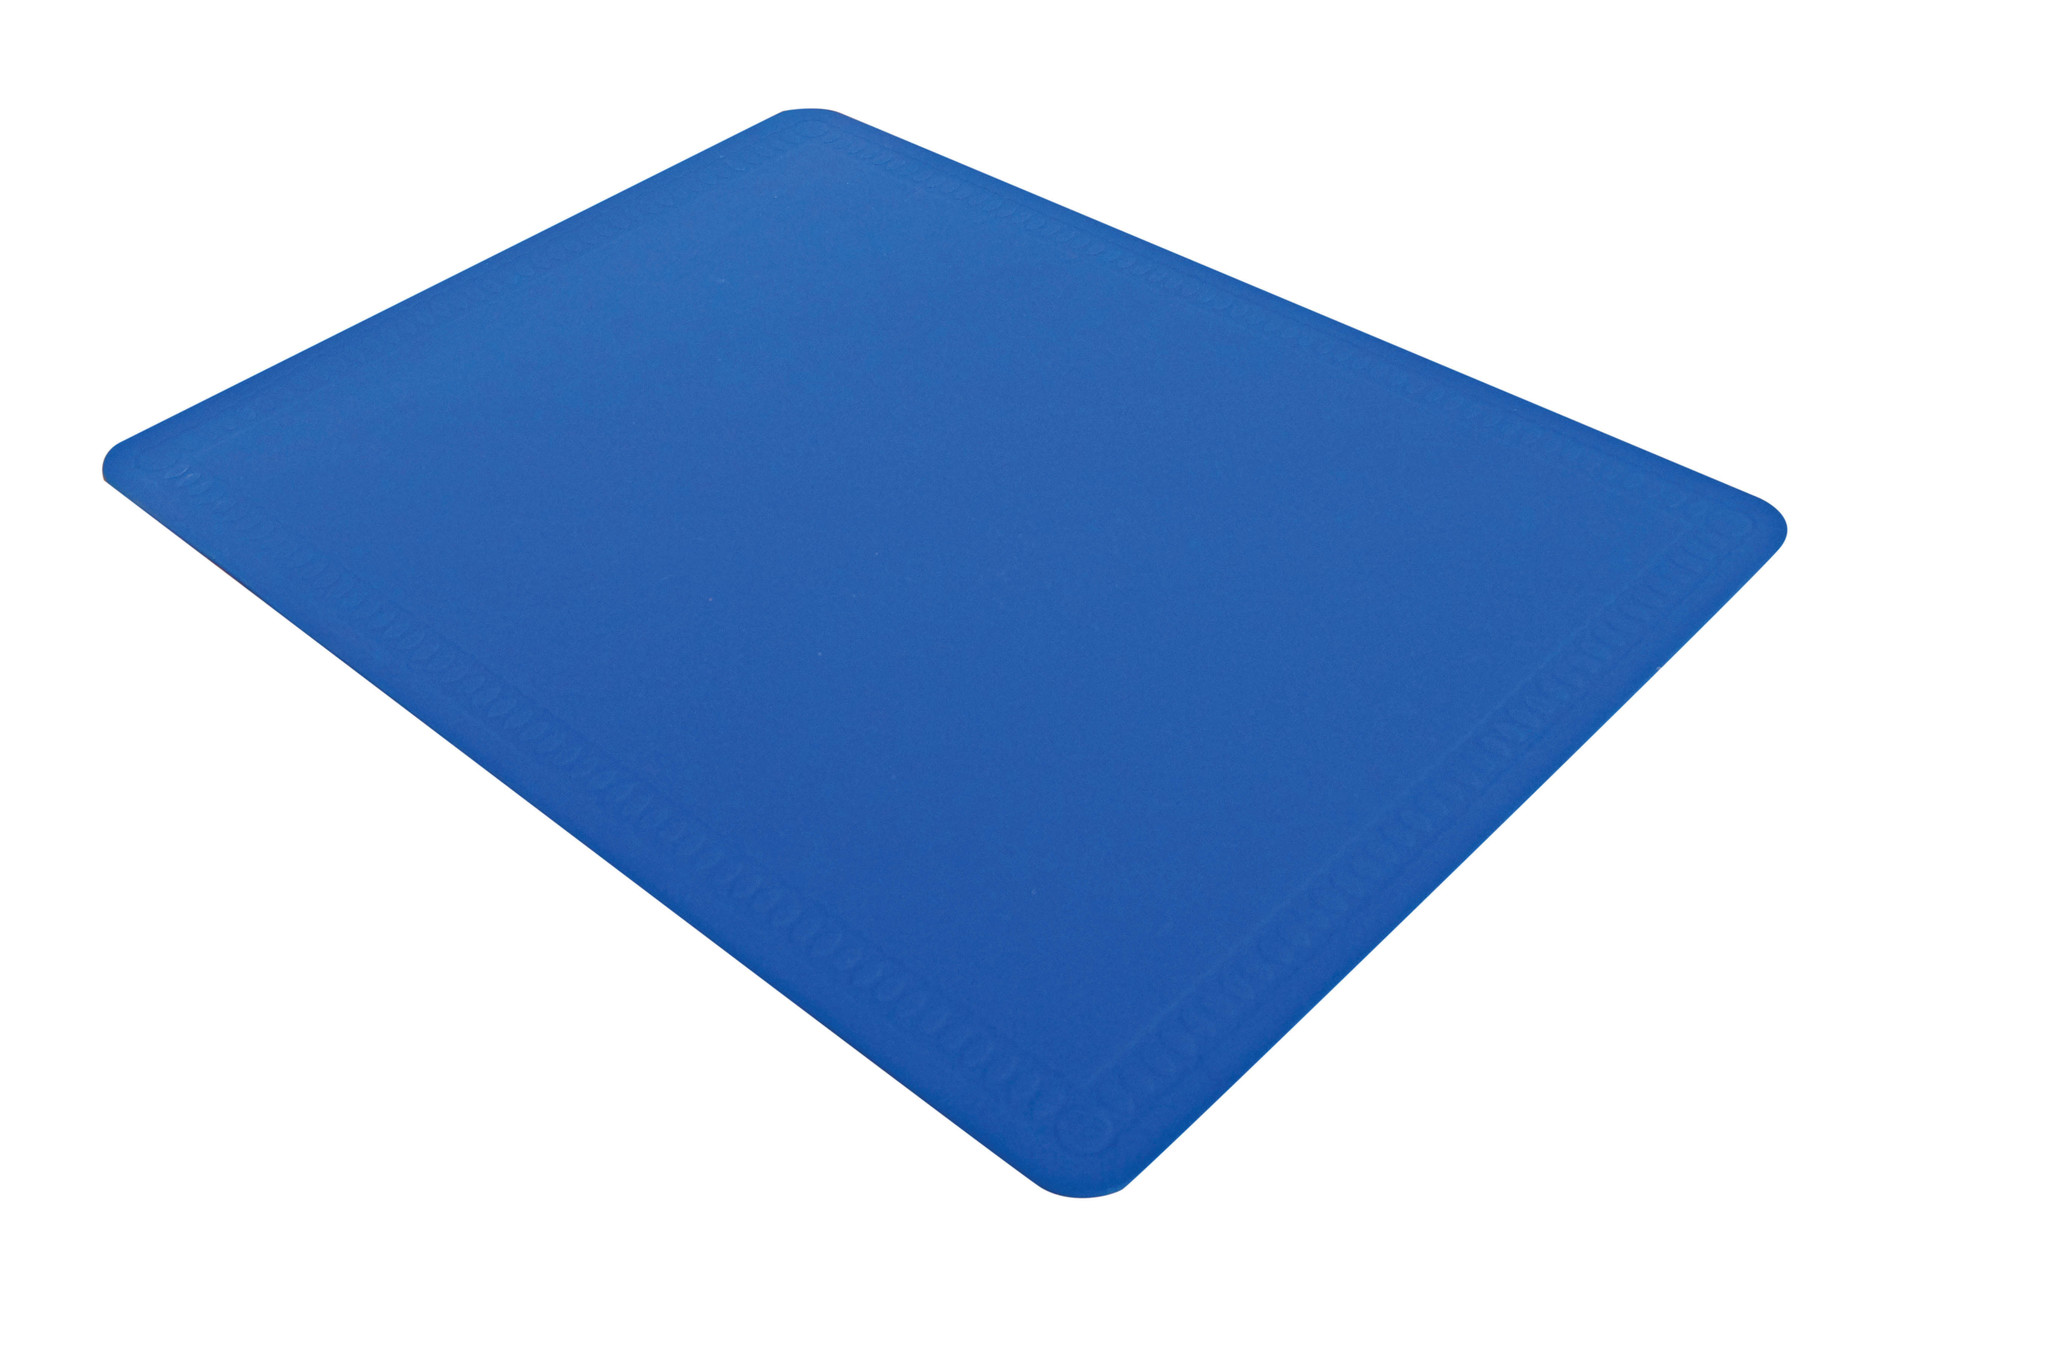 Bliksem Dag krans Aidapt grote rubberen mat van antislip silicone – blauw goedkoop kopen -  Maxtotaal